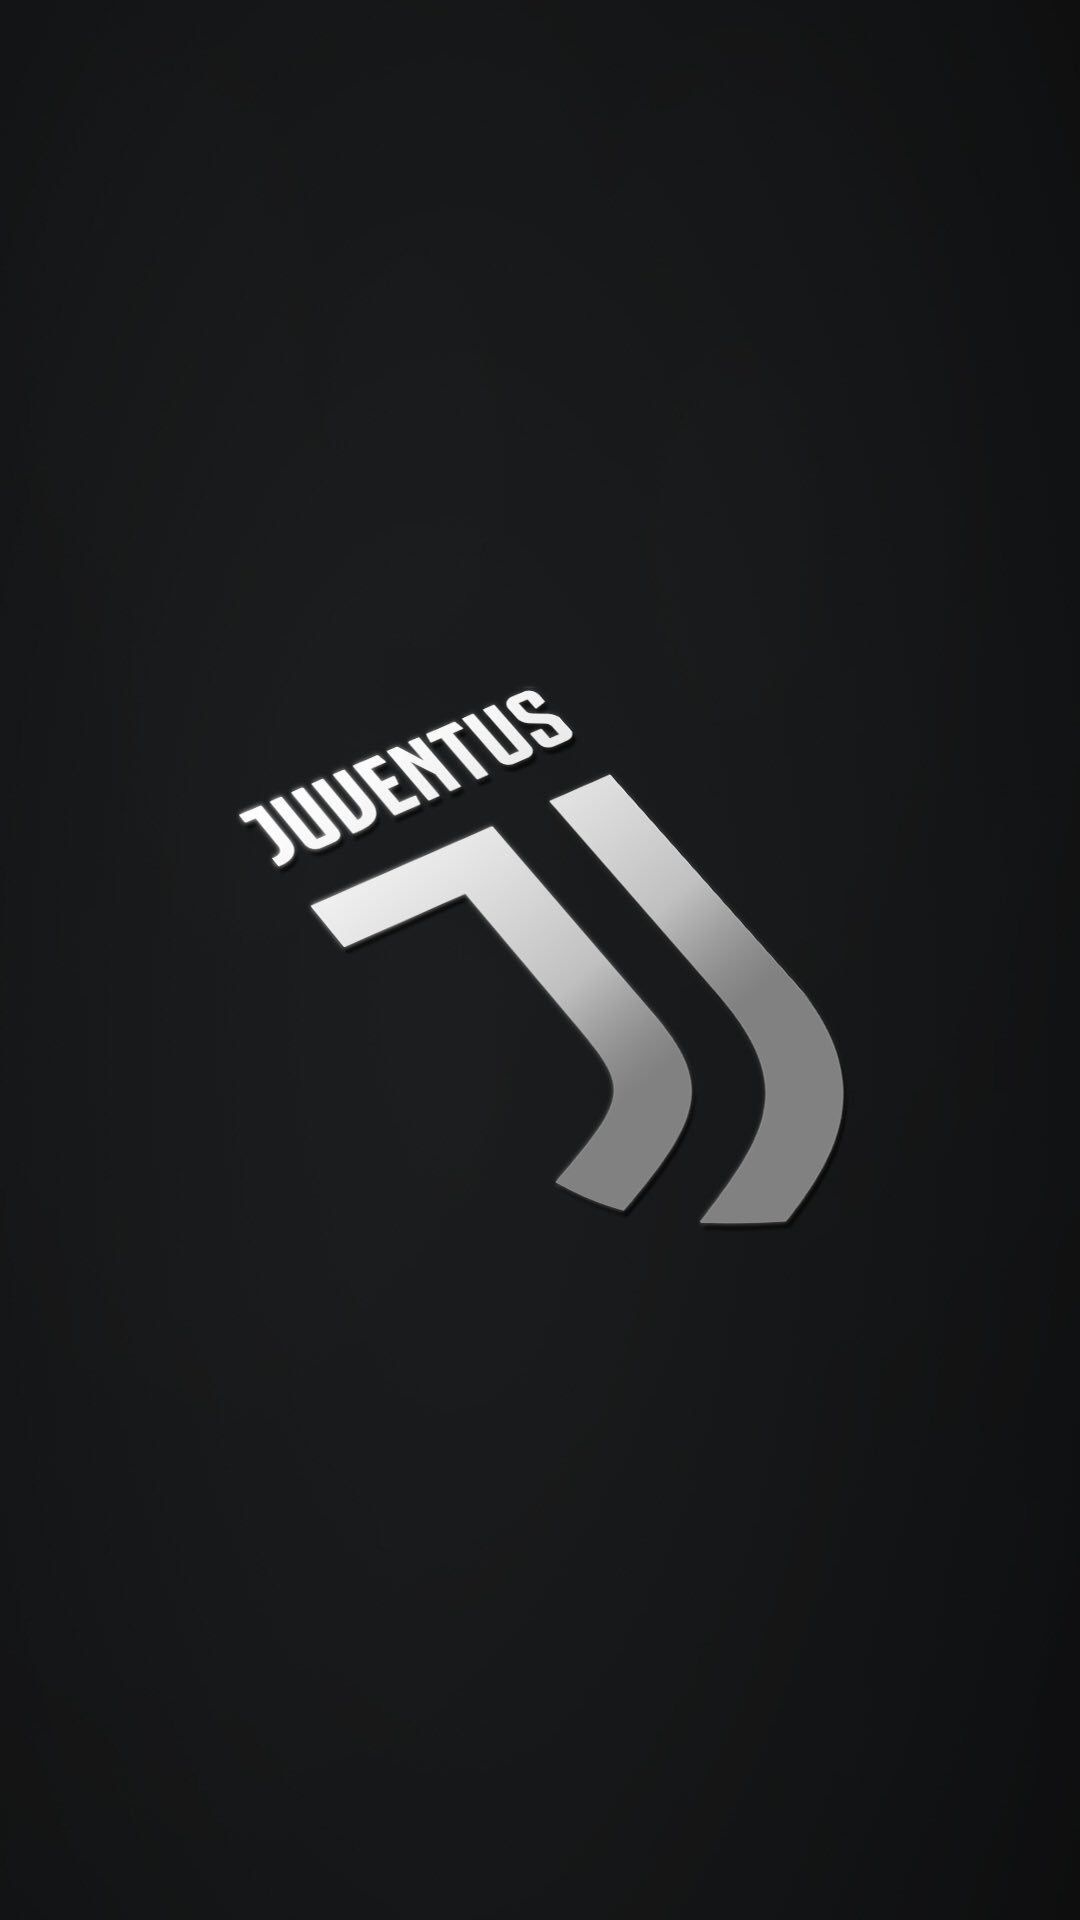 Juventus Logo, Famous football club, Bianconeri pride, Game imagery, 1080x1920 Full HD Phone